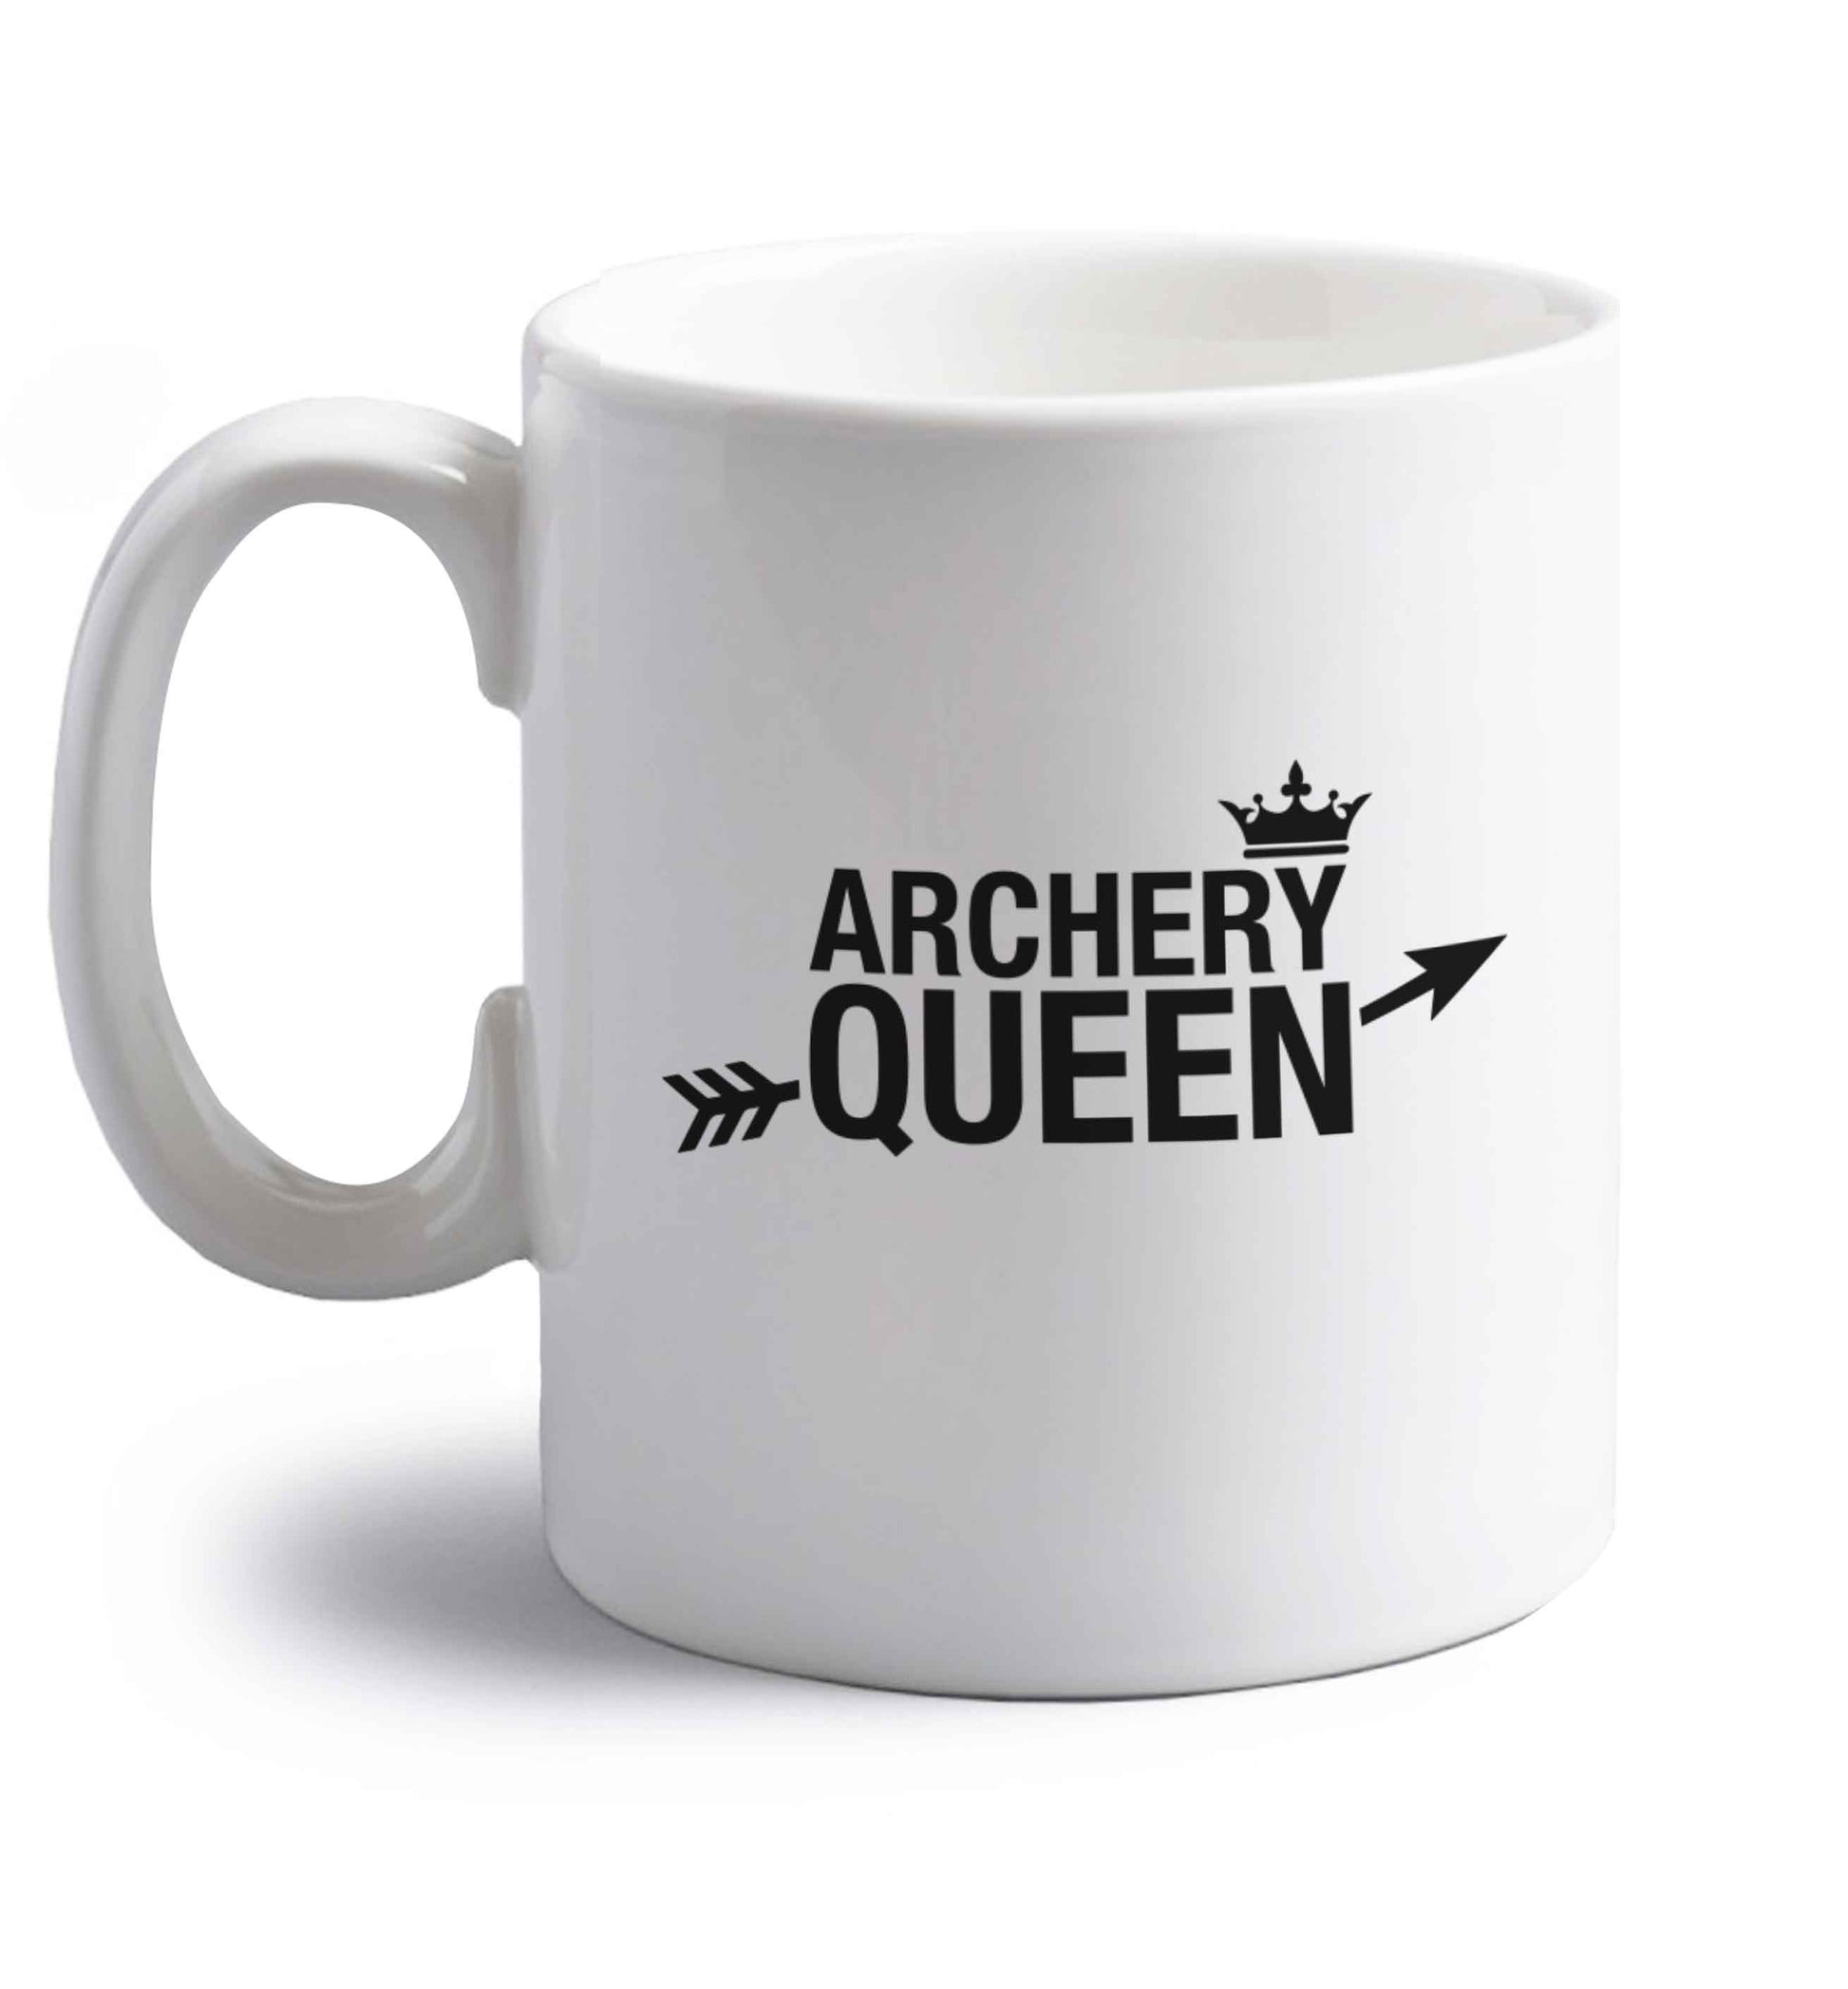 Archery queen right handed white ceramic mug 